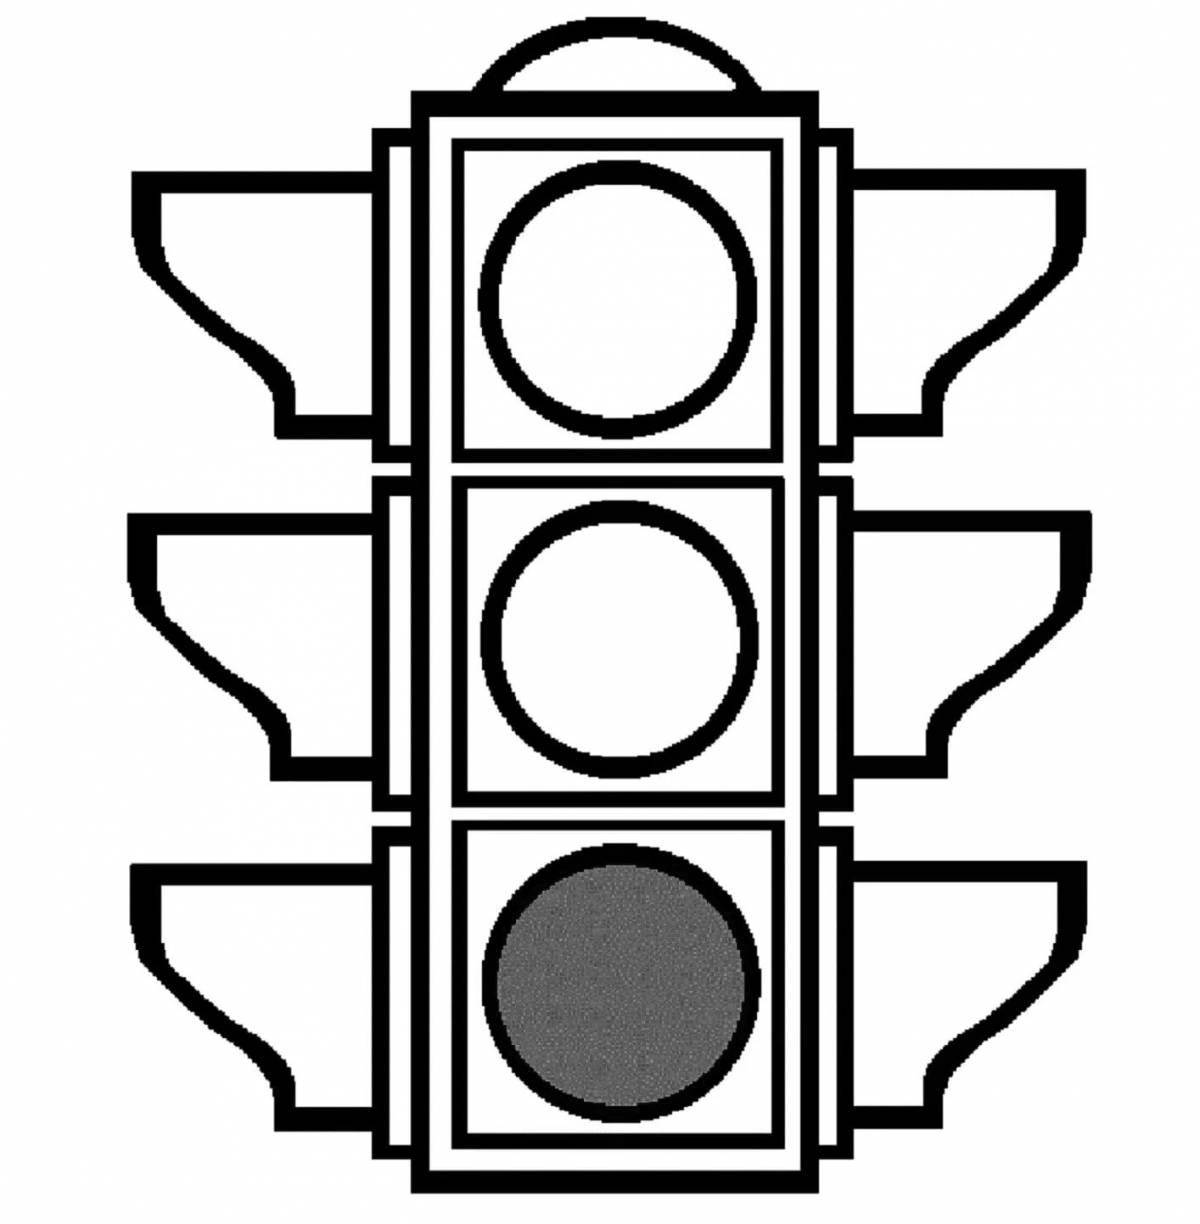 Funny traffic light for pedestrians